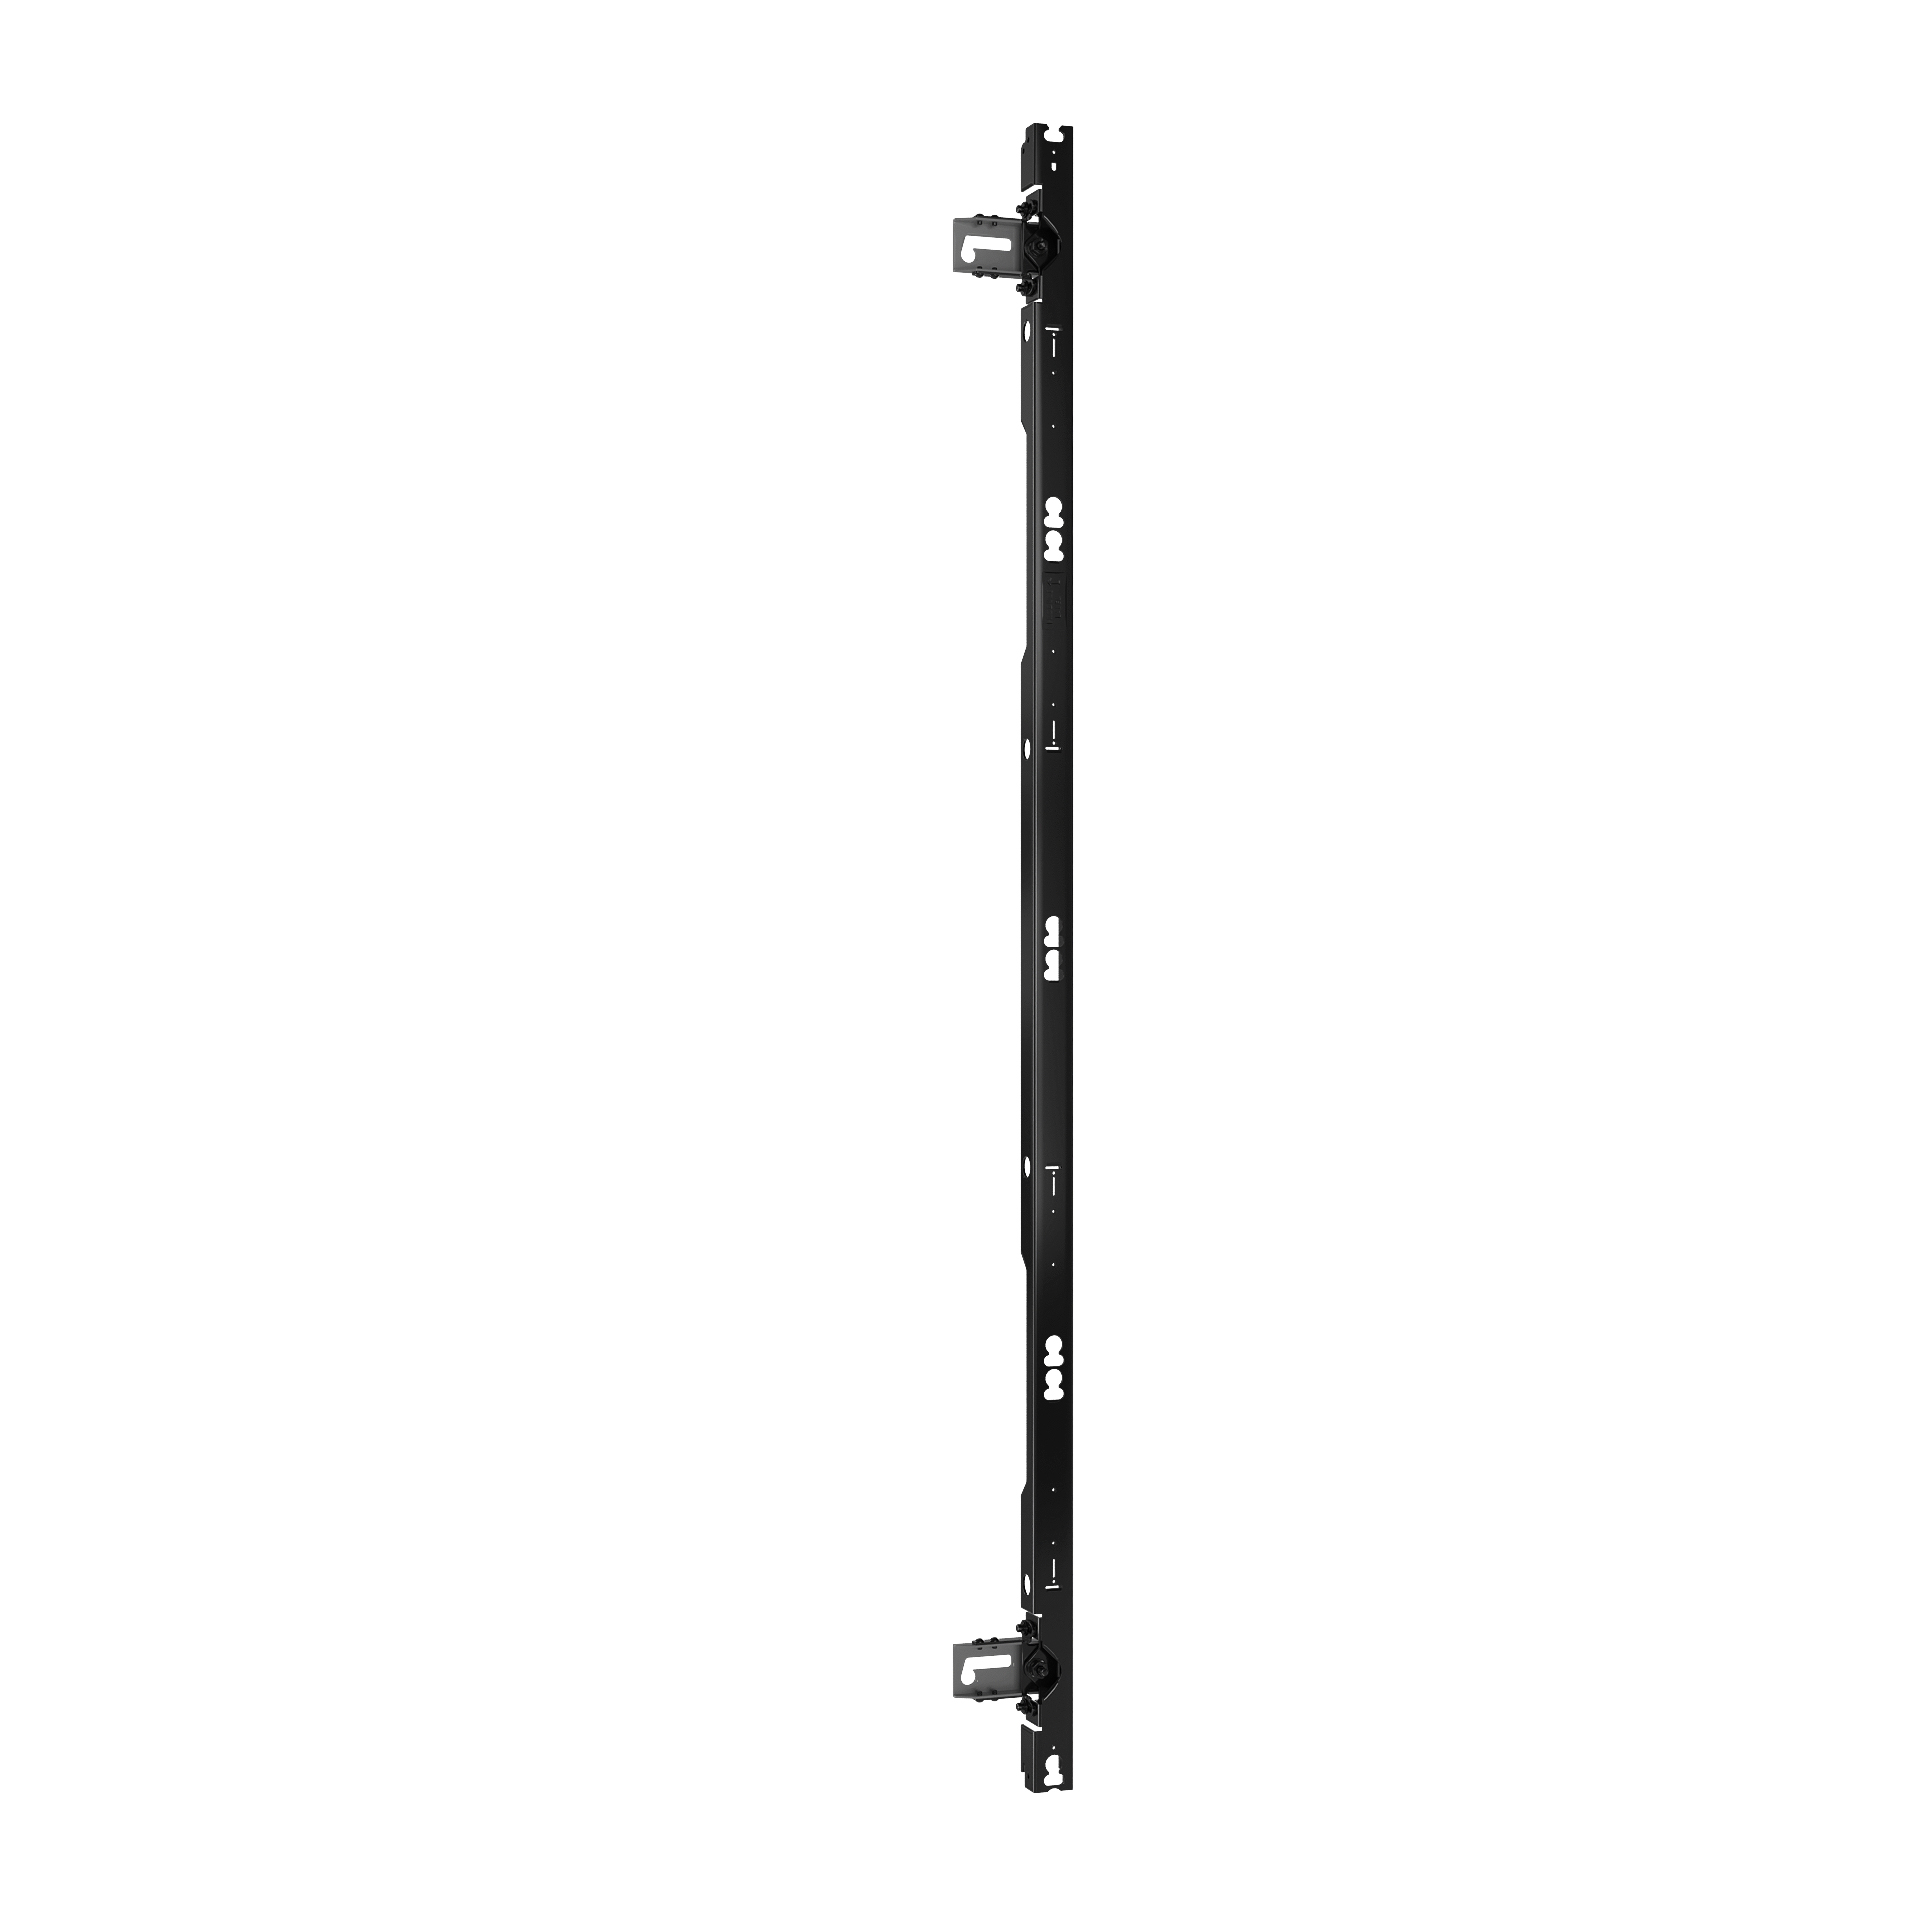 TILD1X5LG2-R Right dvLED Wall Mount for LG LSCB Series Ultra Slim, 5 Displays Tall